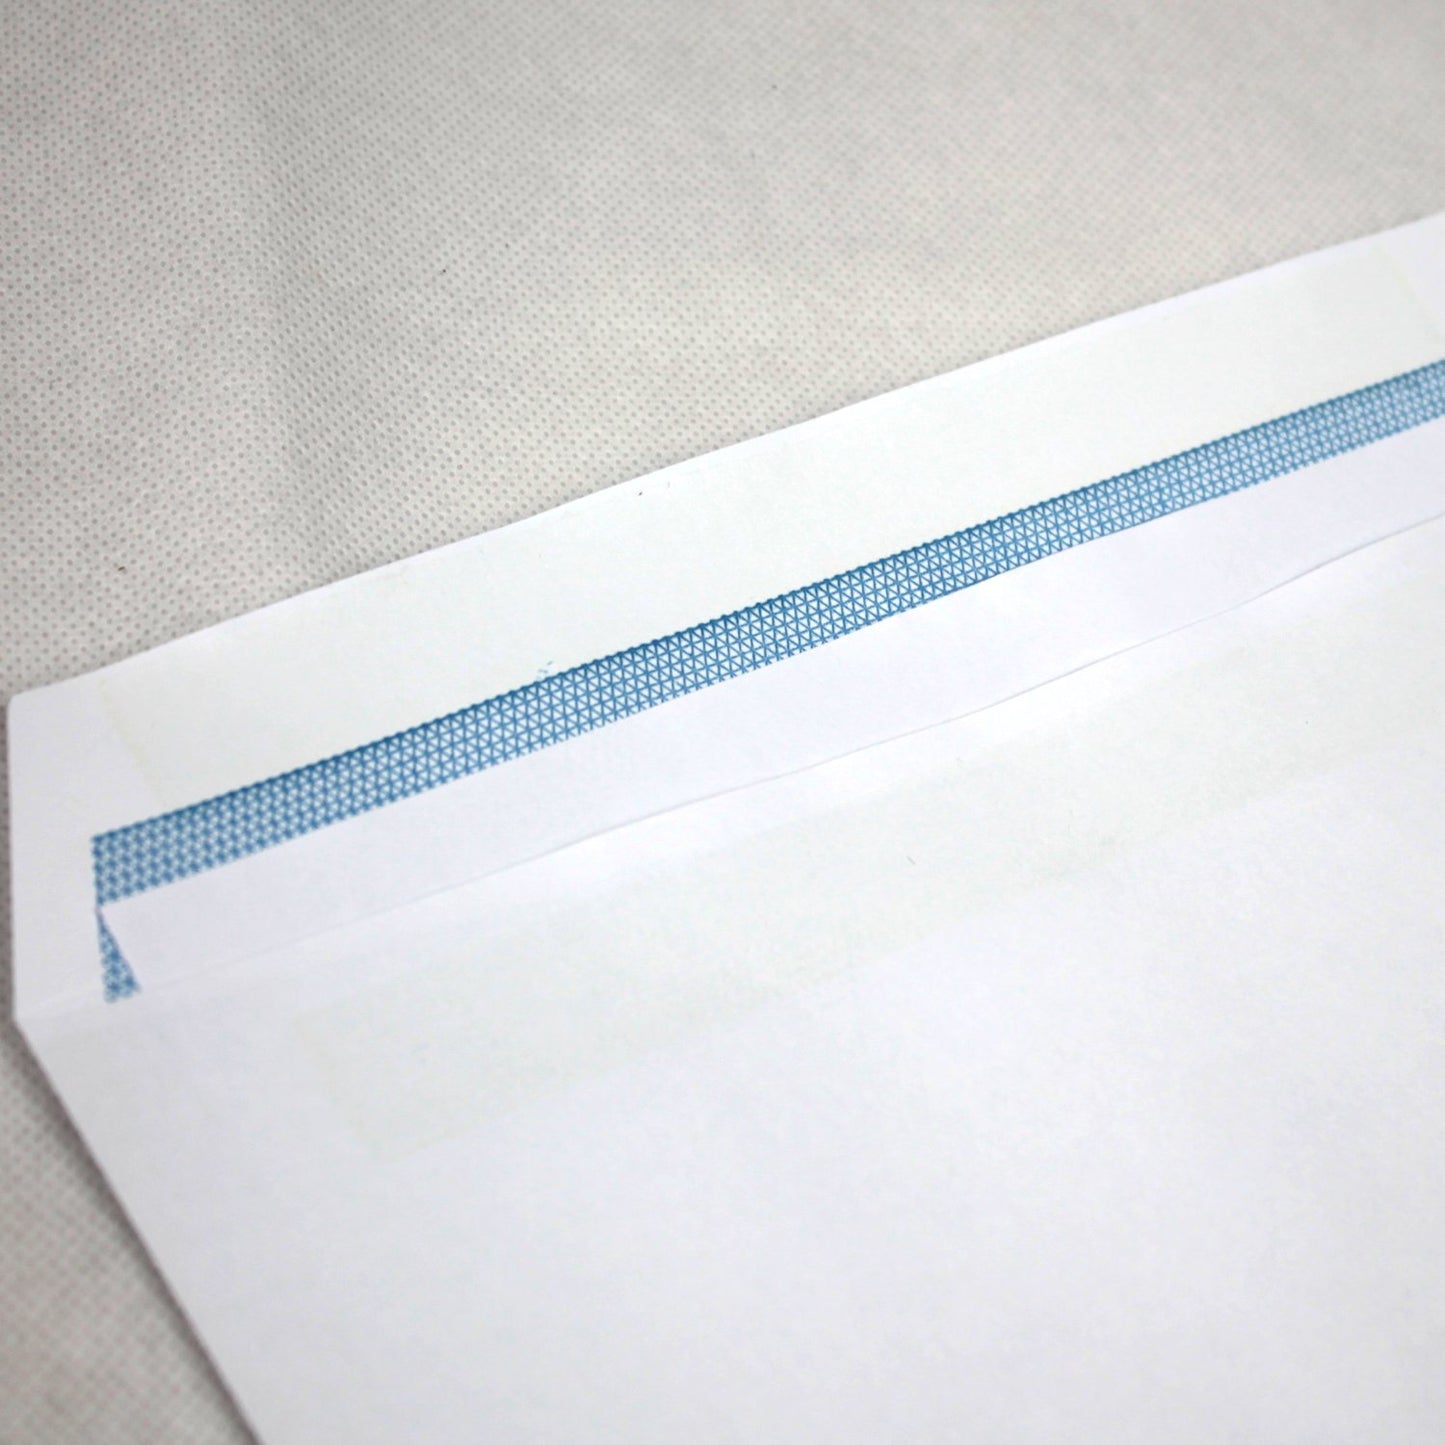 324x229mm C4 White Self Seal Envelopes (Window 40x105mm)